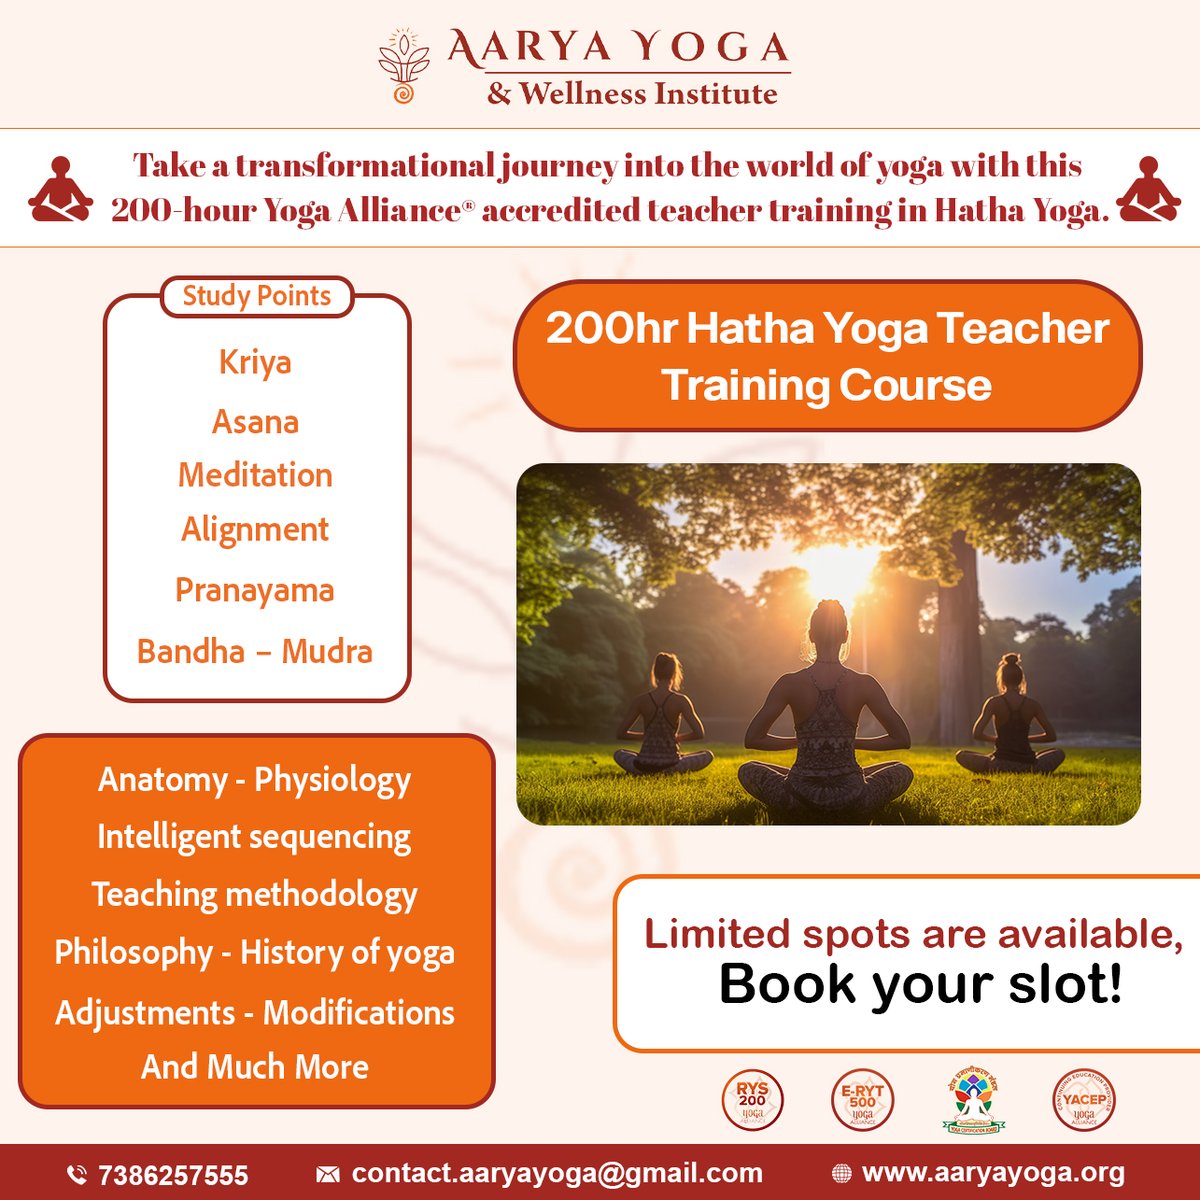 200hr Hatha Yoga Teacher Training Course 

🌿🌟 Limited spots are available, Book your slot! 
Website: aaryayoga.org
Phone: 7386257555
Email: contact.aaryayoga@gmail.com

#sukshmavyayama #yoga #healthyyoga #healthbenefits #SukshmaVyayamaWorkshop #aaryayoga